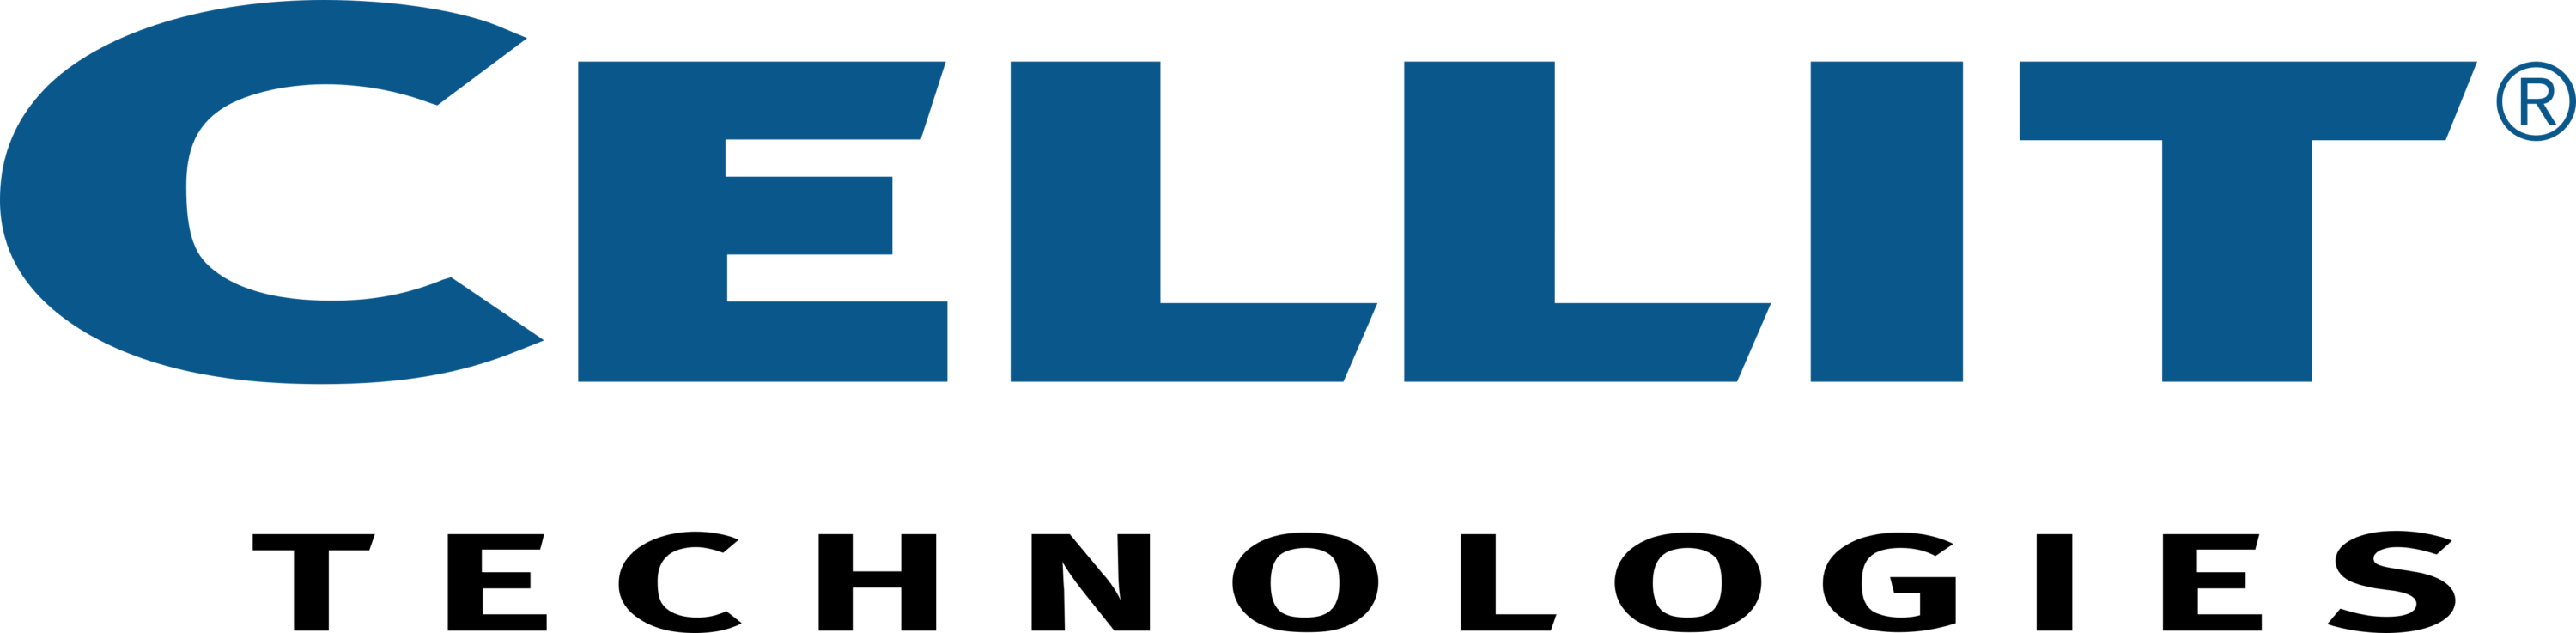 CELLIT Technologies Logo